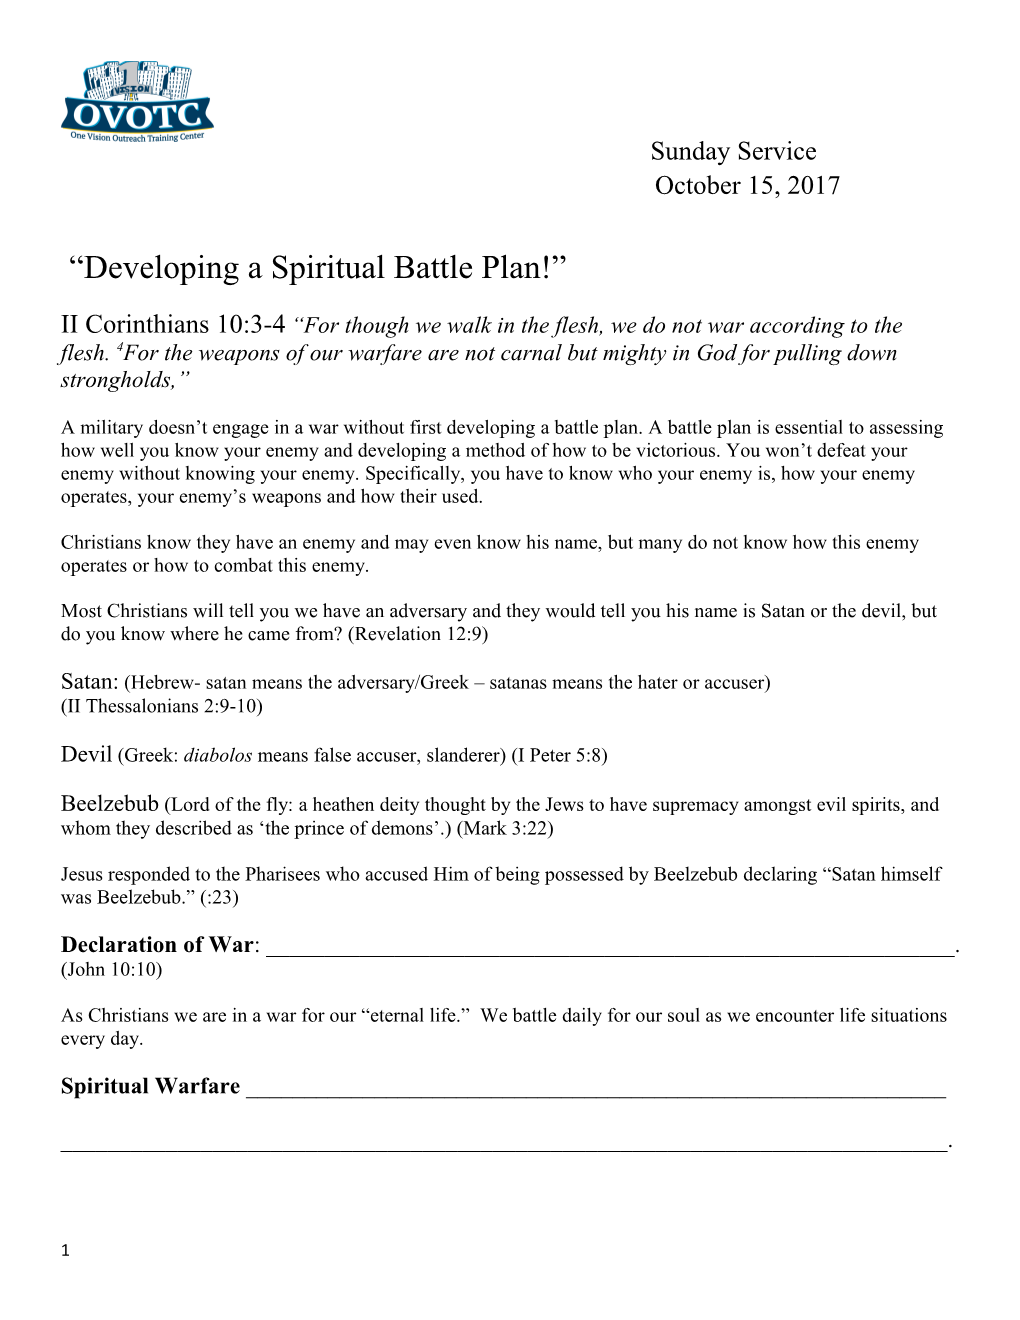 Developing a Spiritual Battle Plan!